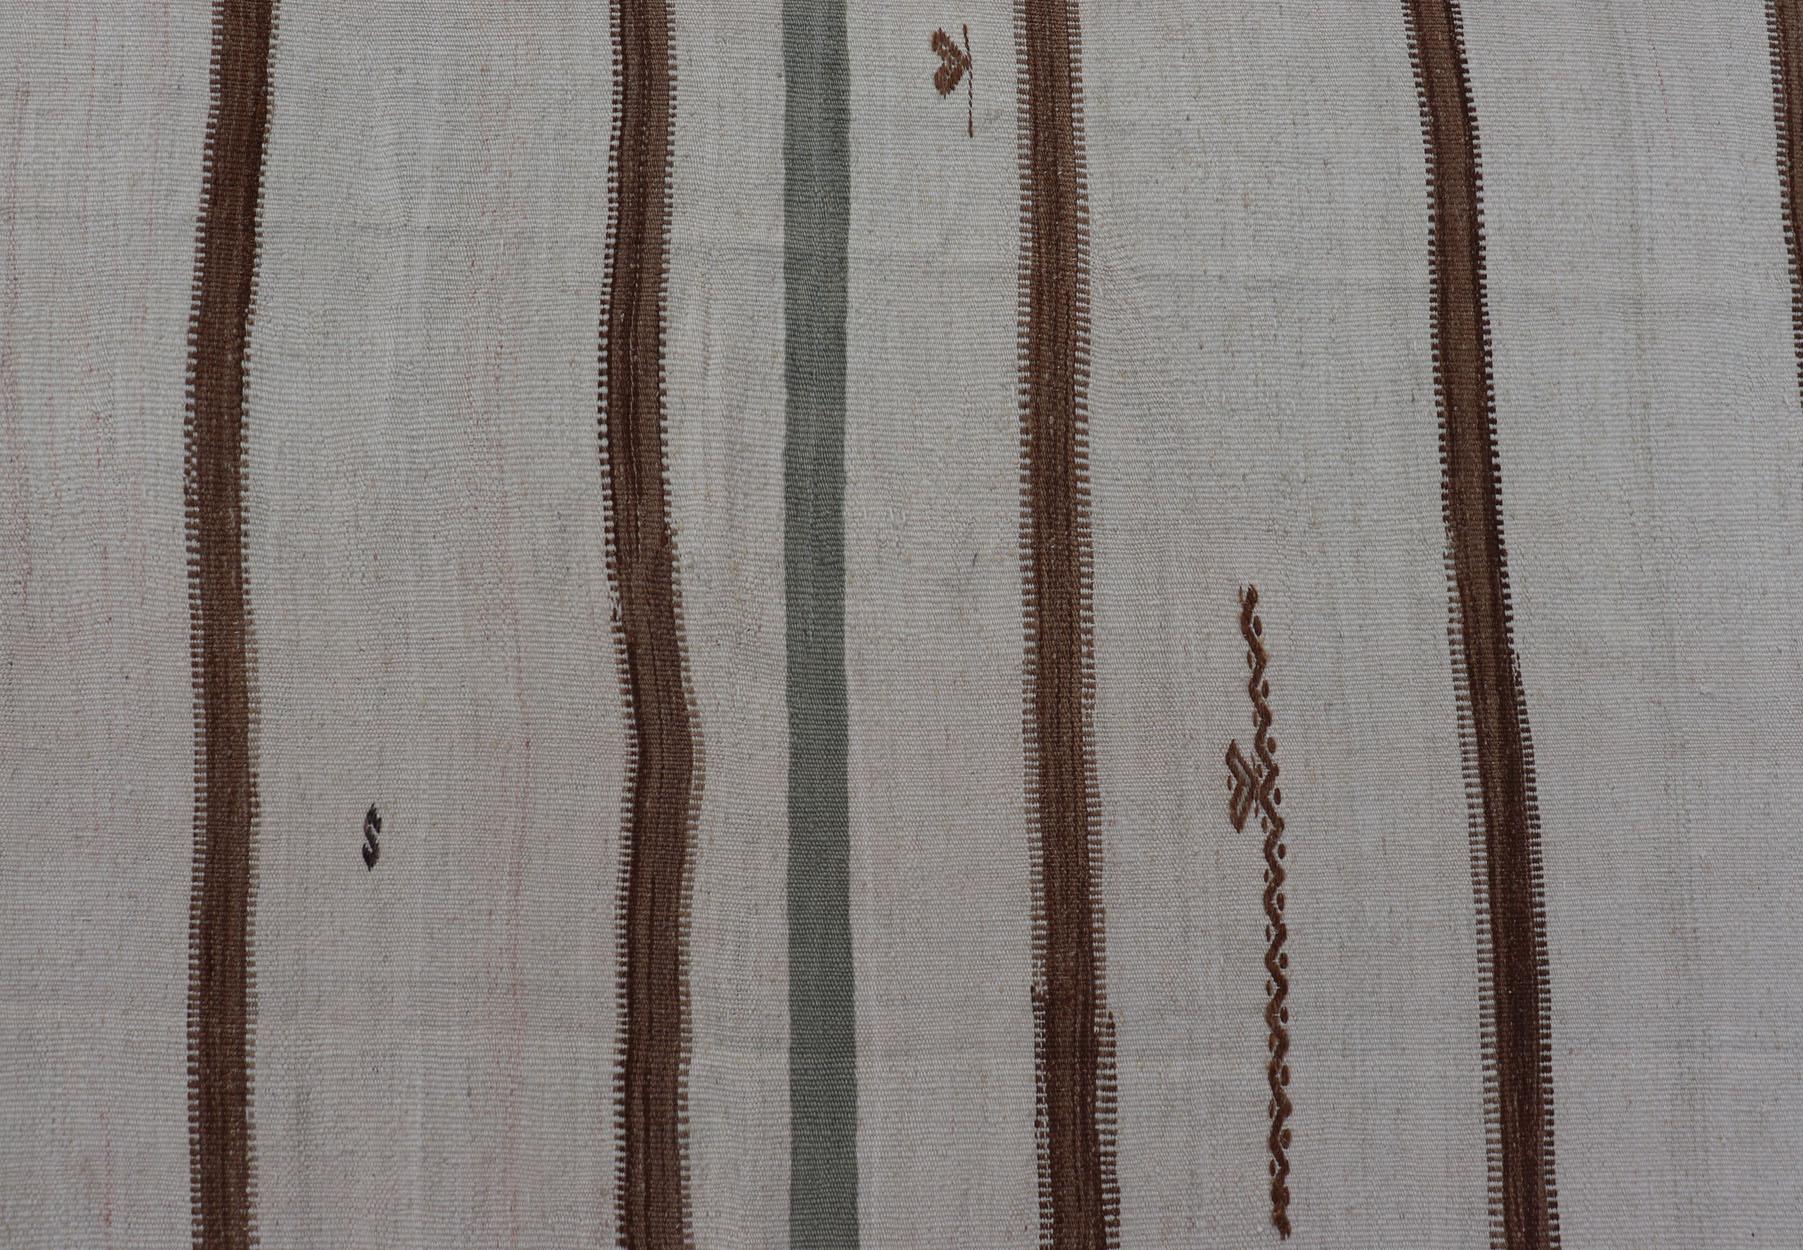 Measures: 13'7 x 15'7
Large Turkish Vintage Flat-Weave in Light Brown and Cream with Stripe Design. Keivan Woven Arts / rug EN-14462, country of origin / type: Turkey / Kilim, circa 1950
This vintage striped design Turkish Kilim rendered in shade of